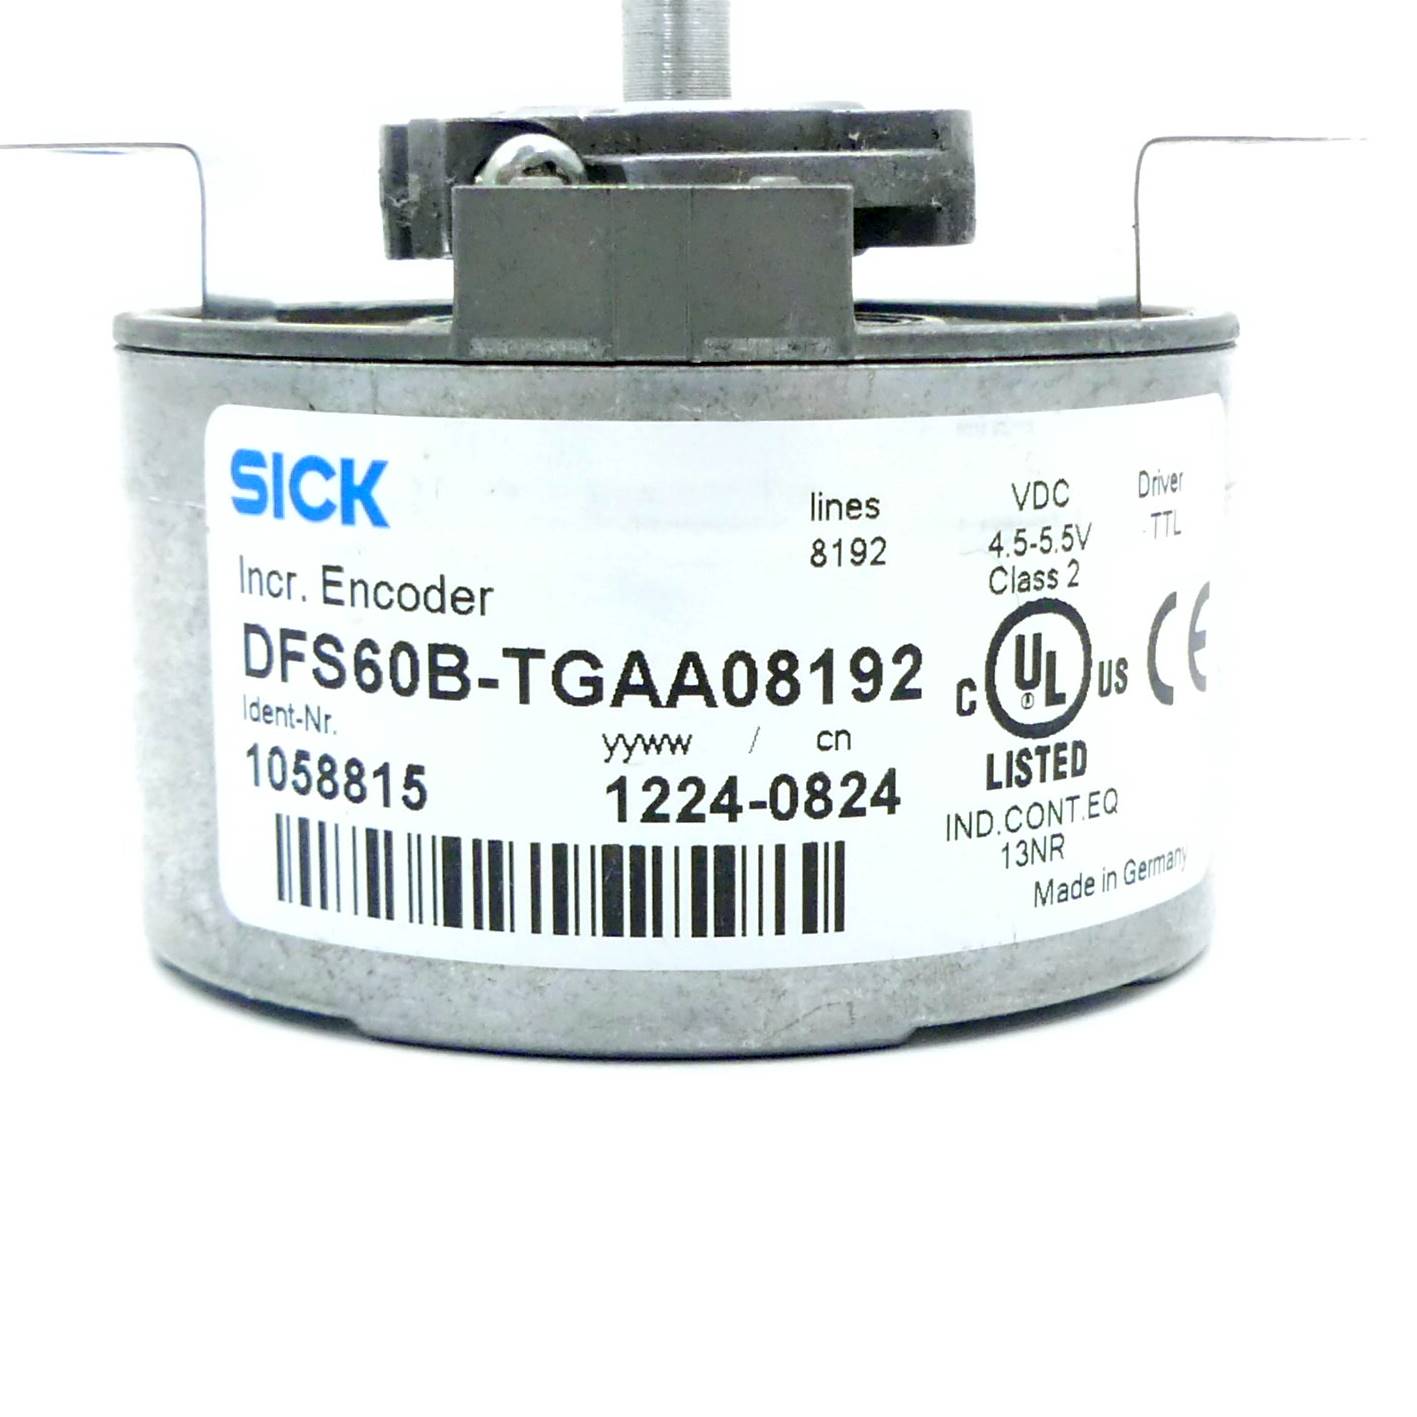 Incremental Encoder DFS60B-TGAA08192 